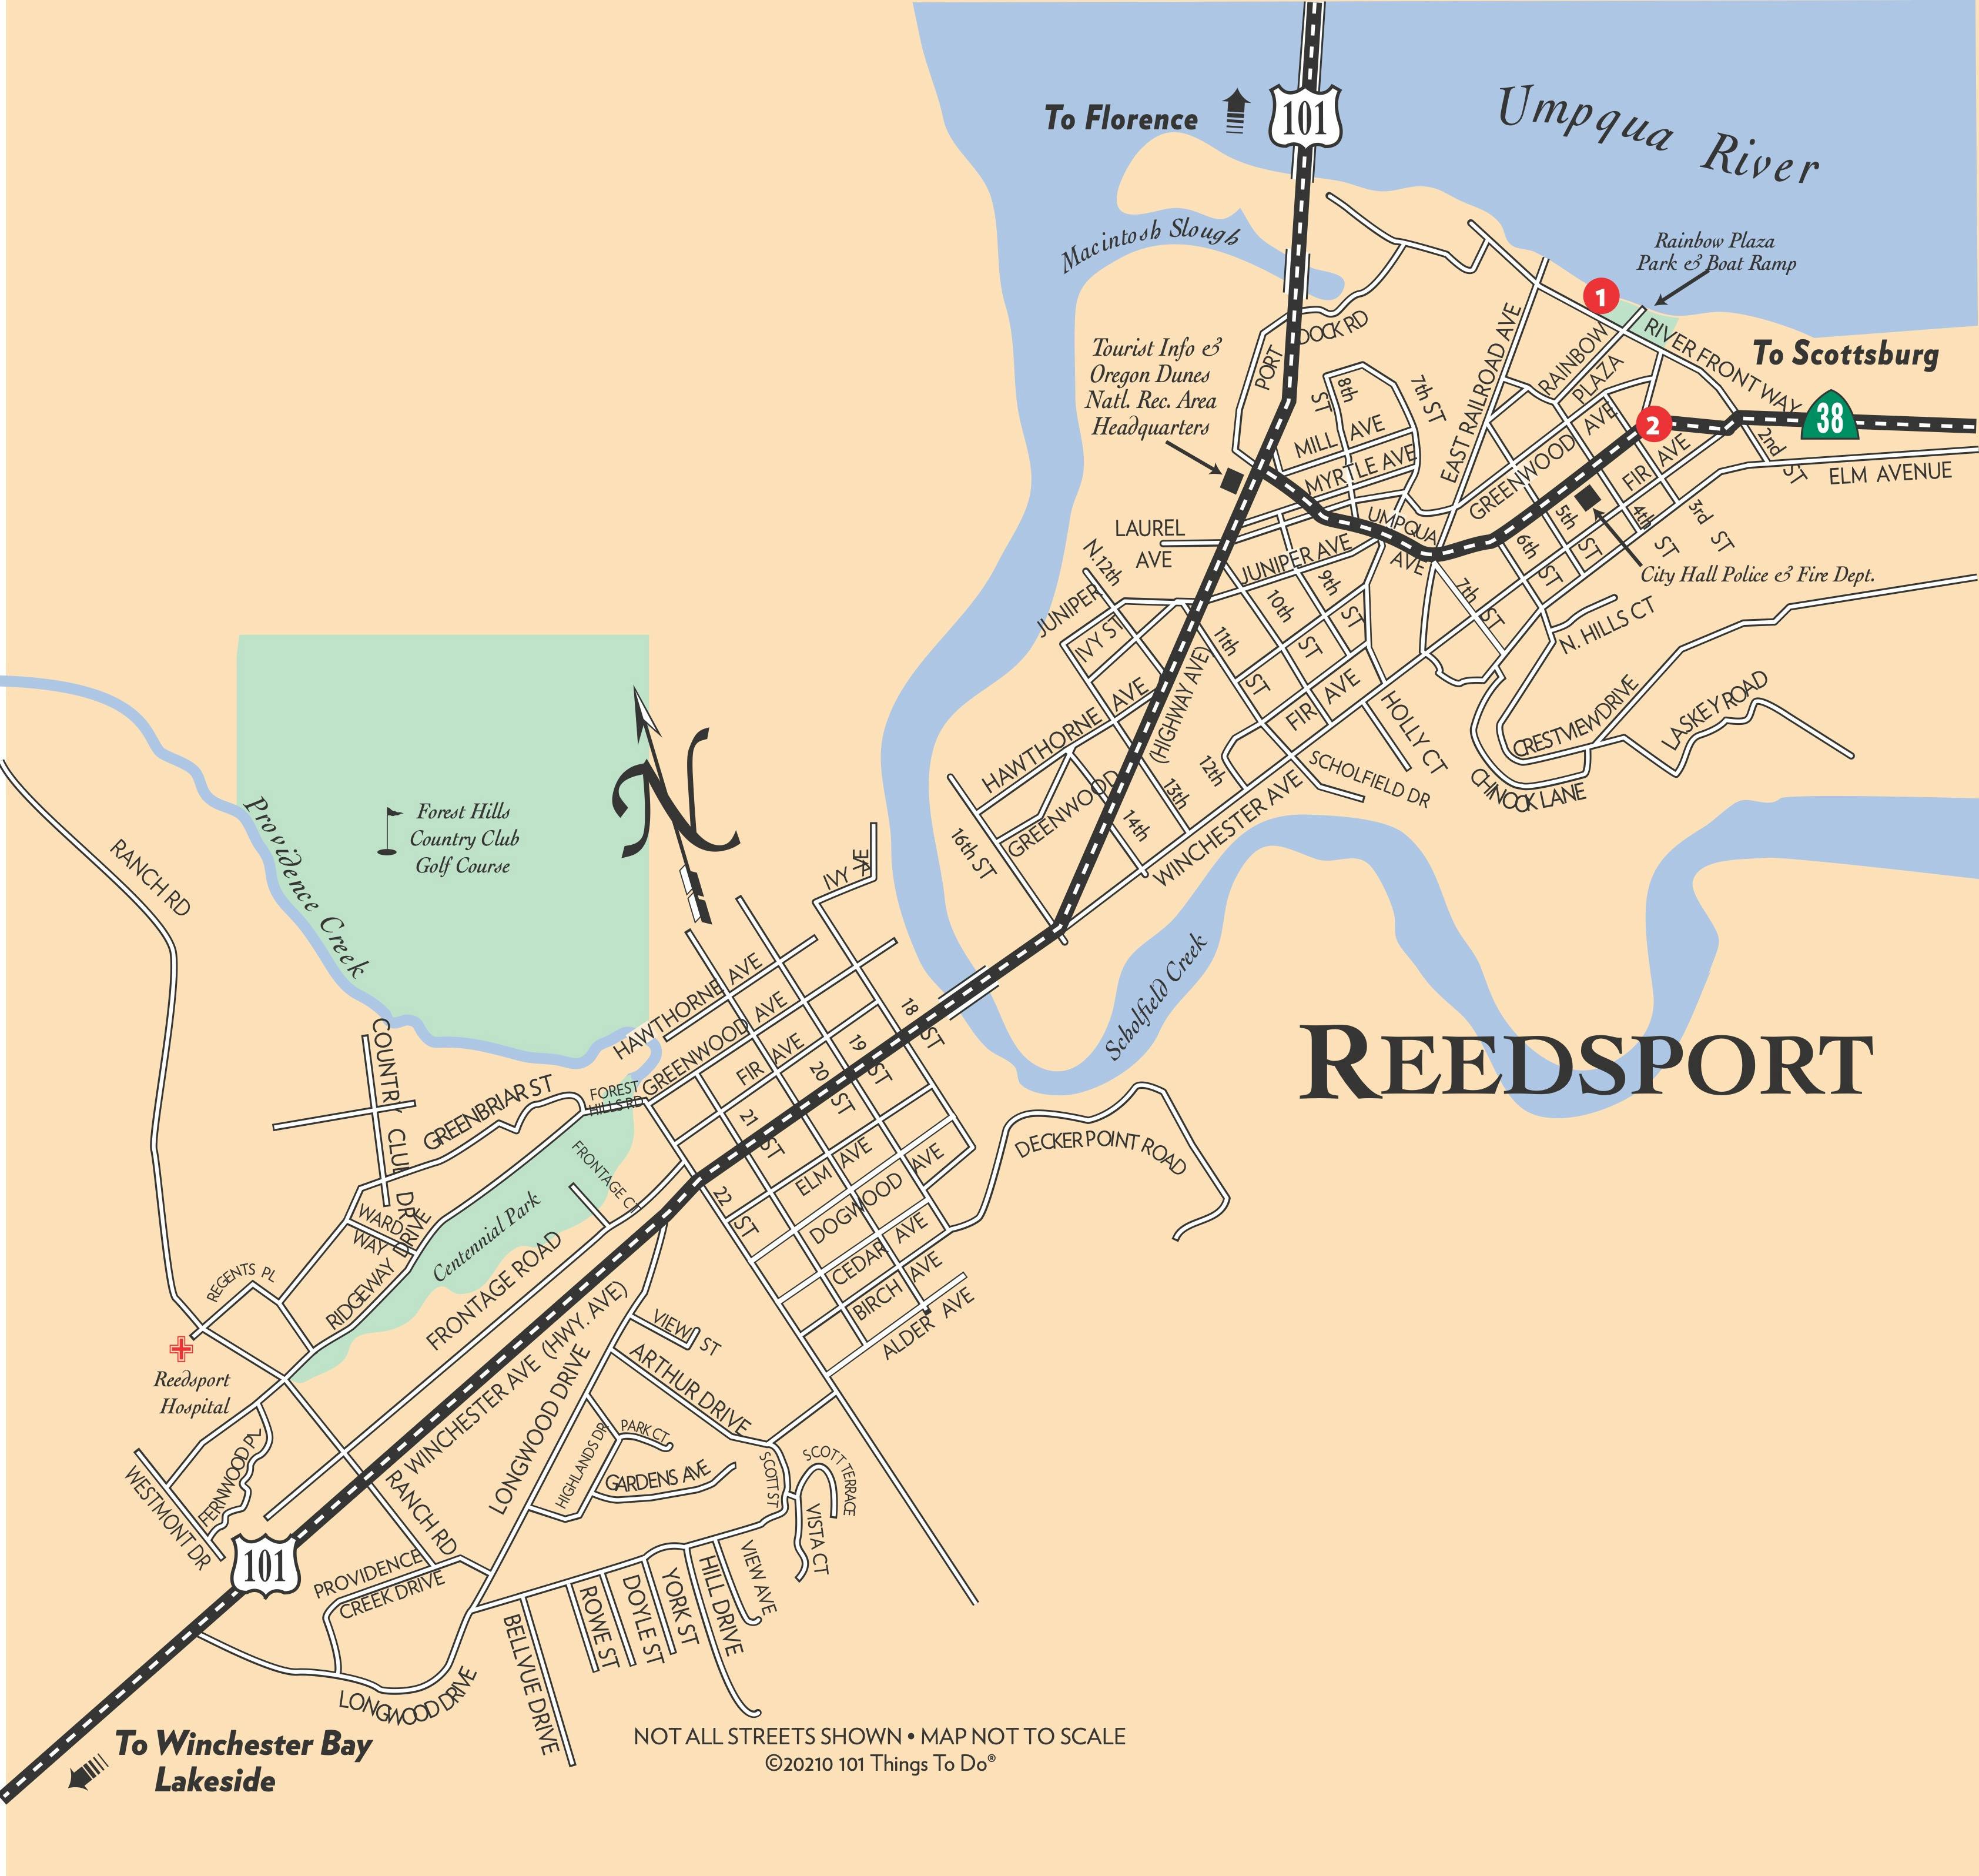 Map of Reedsport